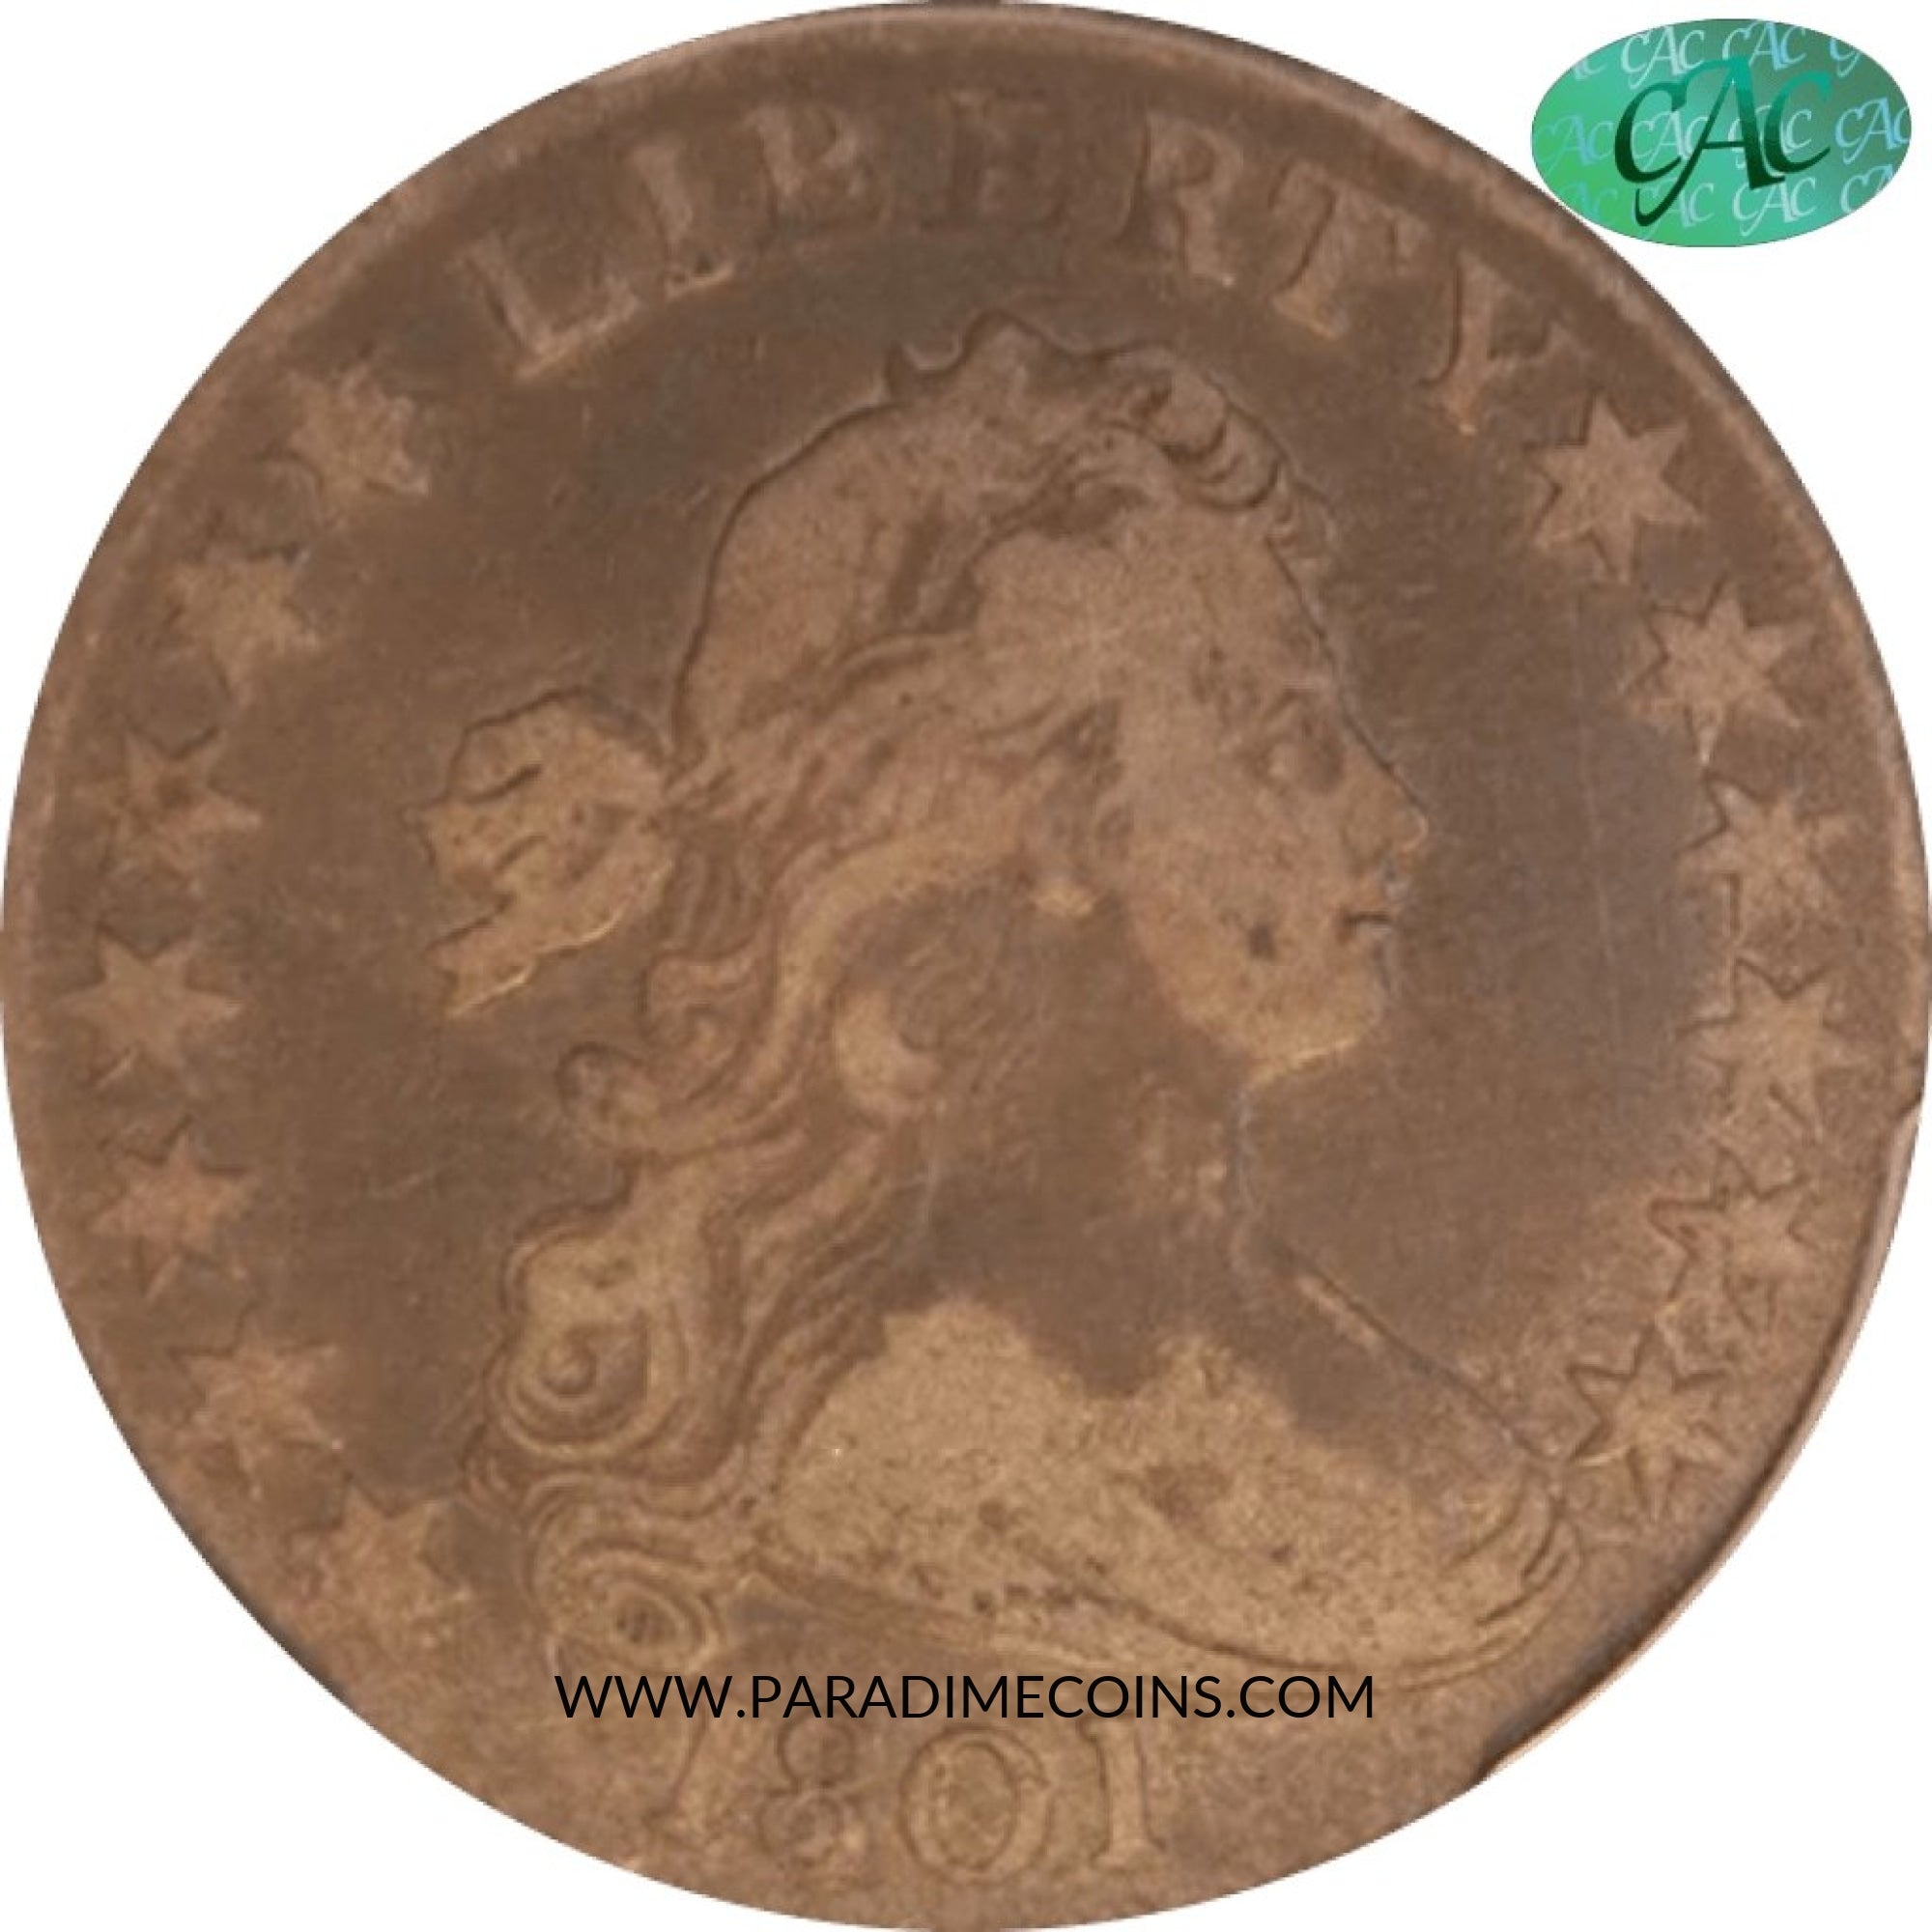 1801 50C F15 PCGS CAC. - Paradime Coins | PCGS NGC CACG CAC Rare US Numismatic Coins For Sale